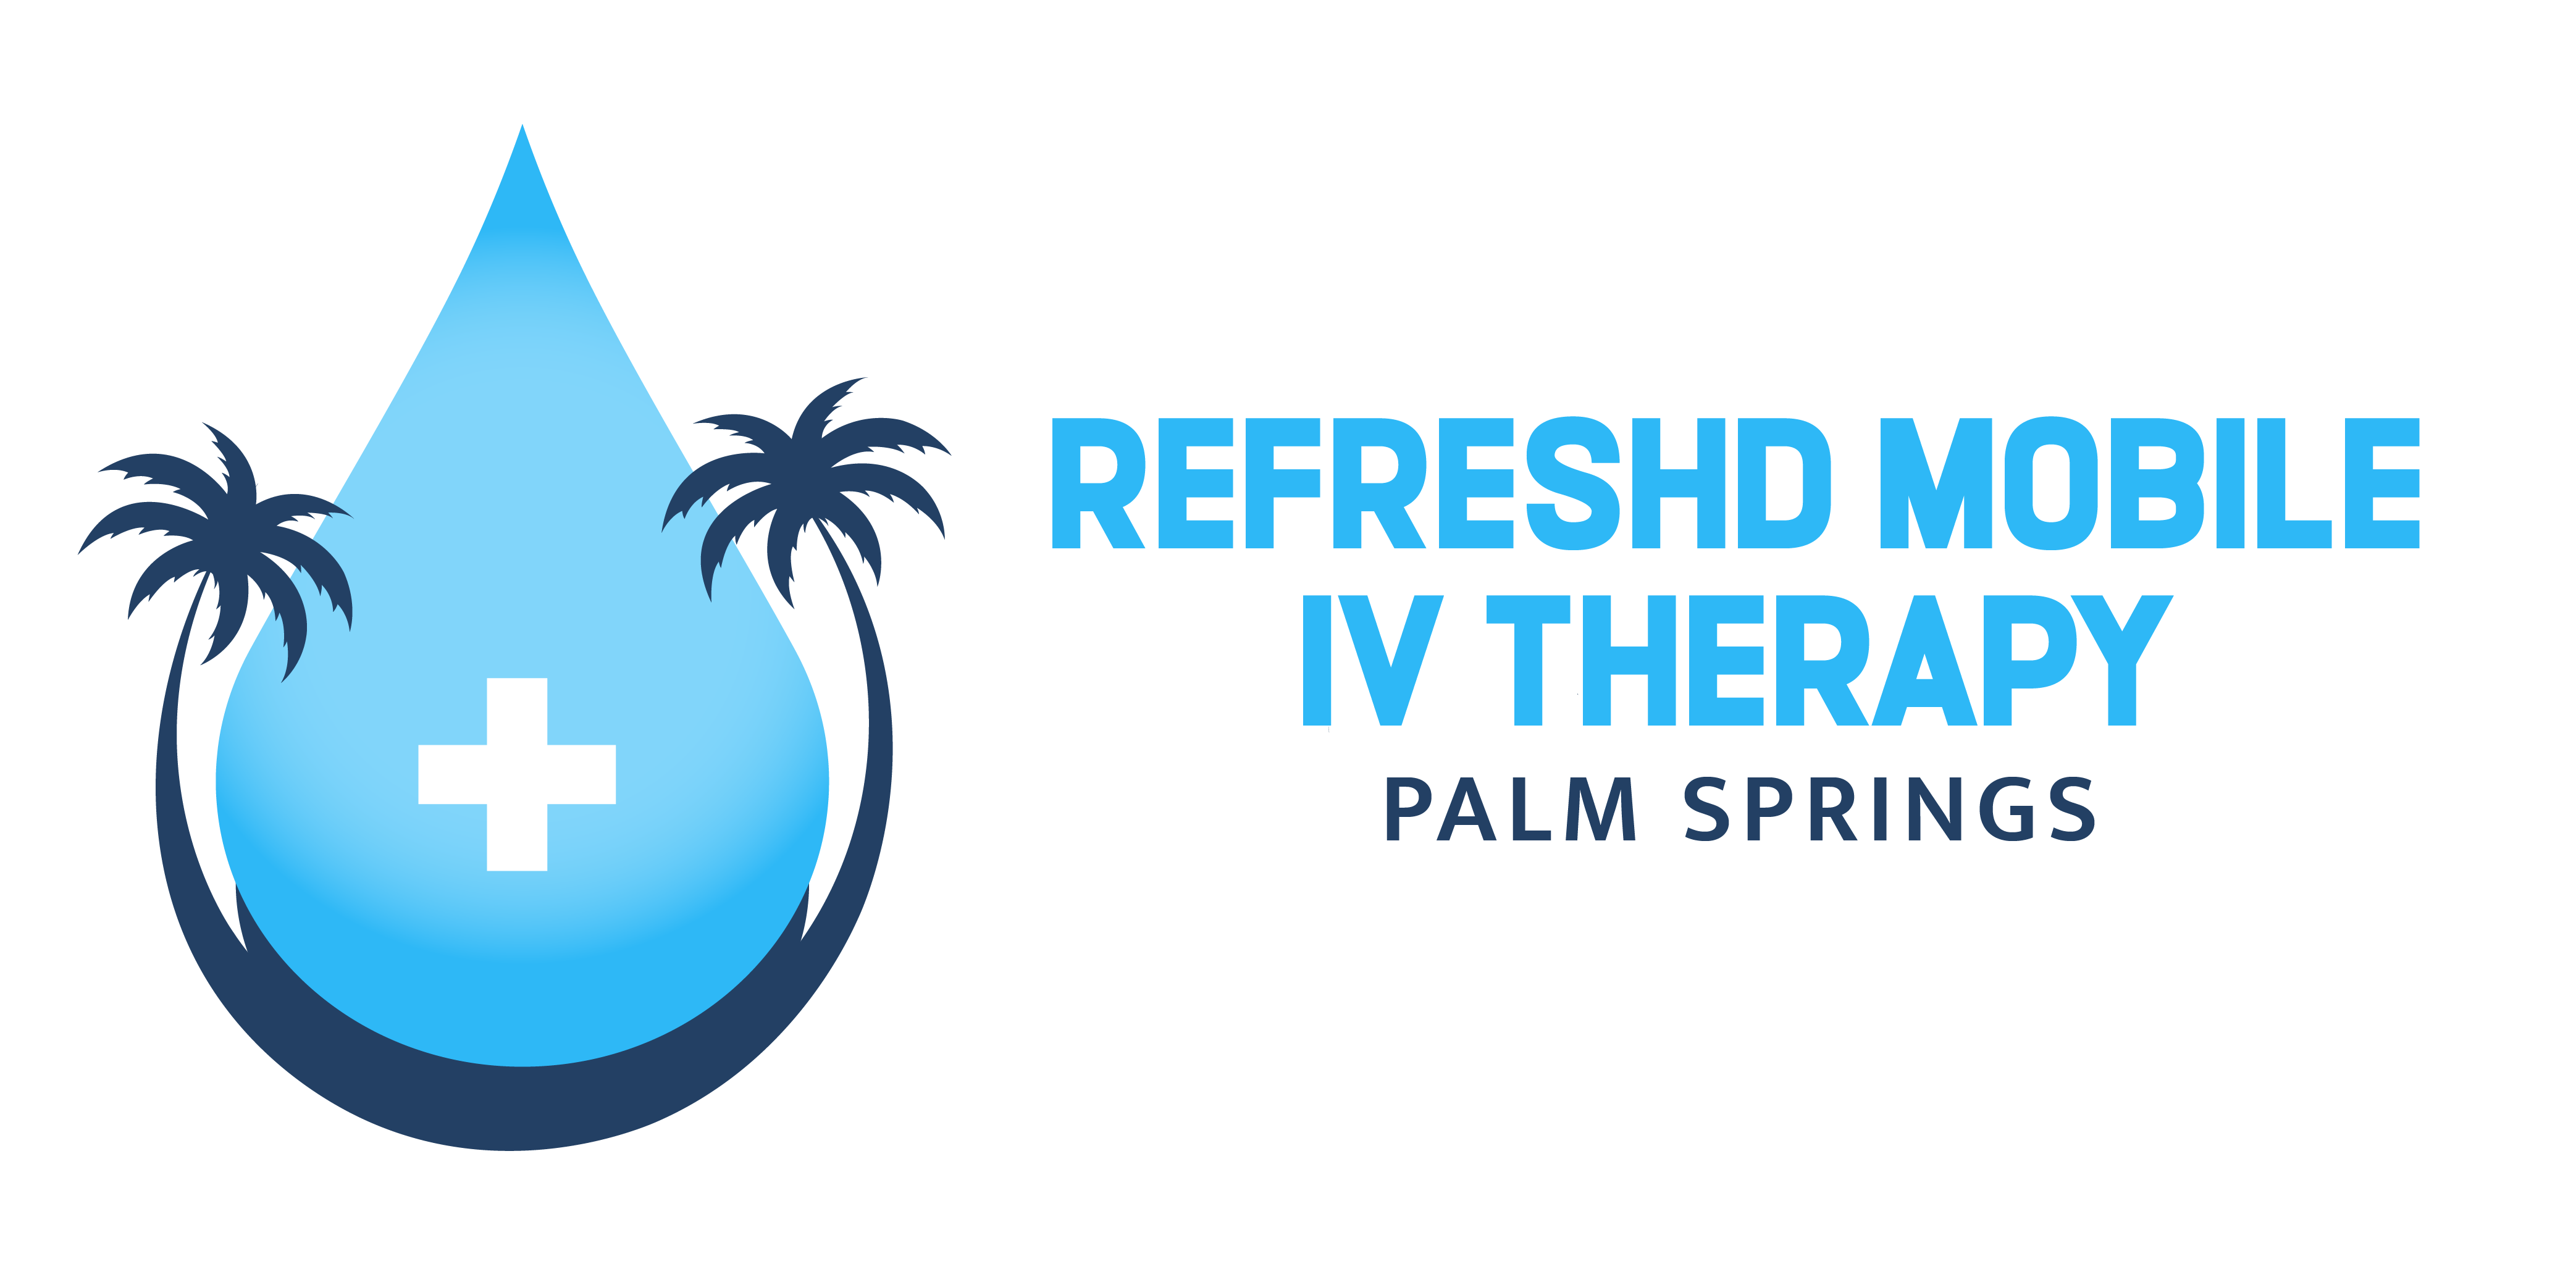 Refresh Mobile IV Therapy Palm Springs Horizontal Logo2